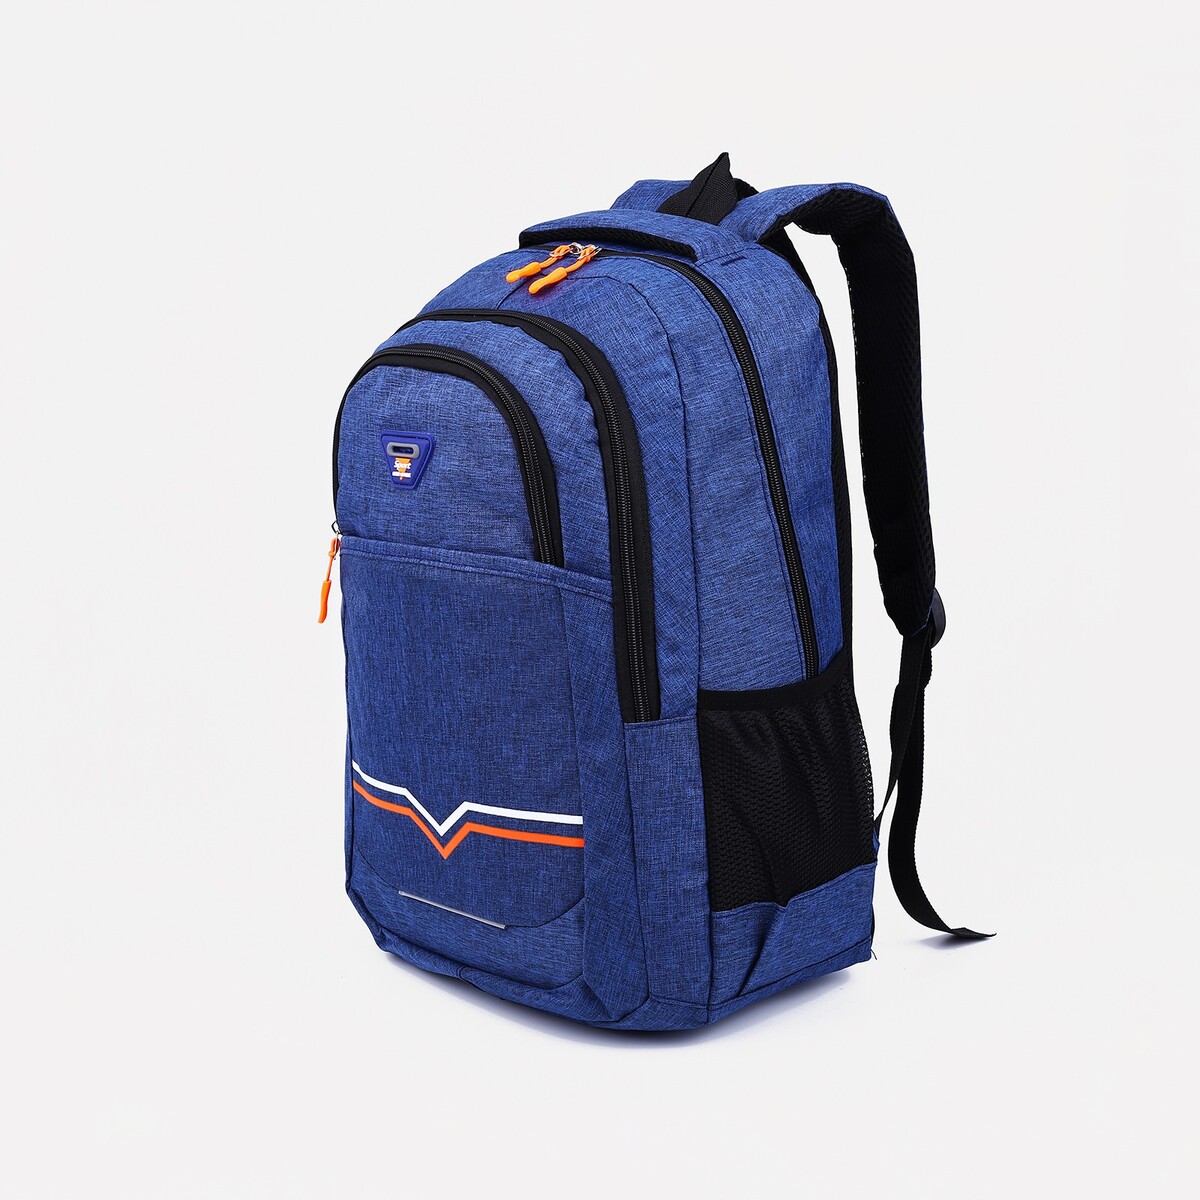 Рюкзак на молнии, 2 наружных кармана, цвет синий рюкзак туристический на молнии 4 наружных кармана синий